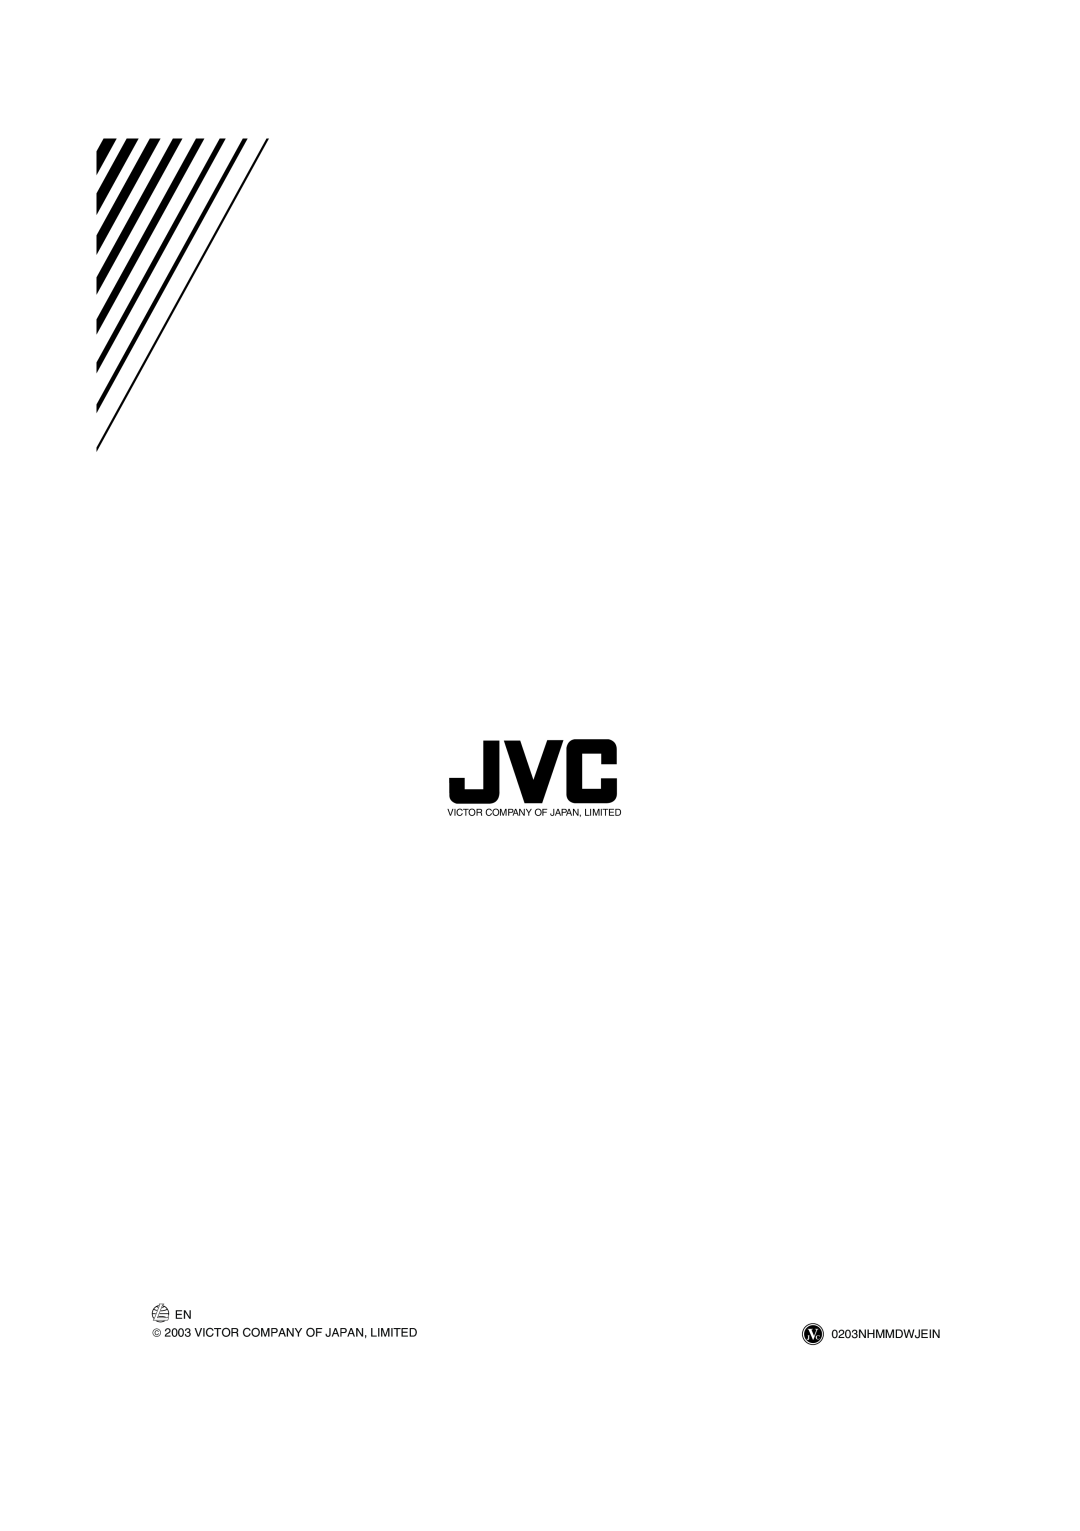 JVC LVT1002-001B manual  2003 VICTOR COMPANY OF JAPAN, LIMITED, 0203NHMMDWJEIN, Victor Company Of Japan, Limited 